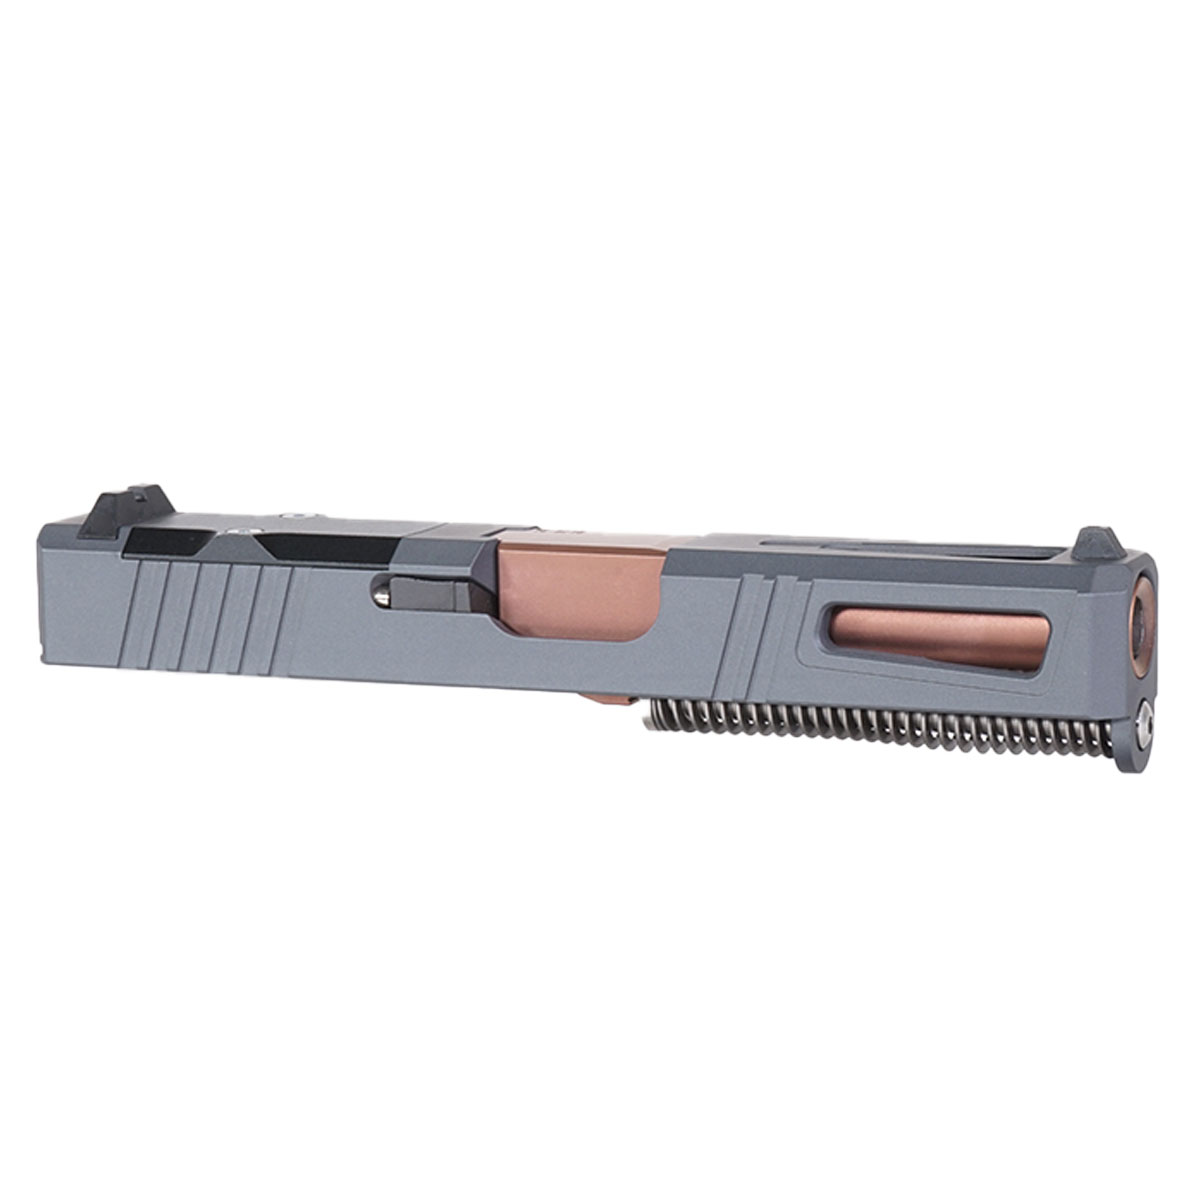 DD 'Bronzesmith' 9mm Complete Slide Kit - Glock 19 Gen 1-3 Compatible